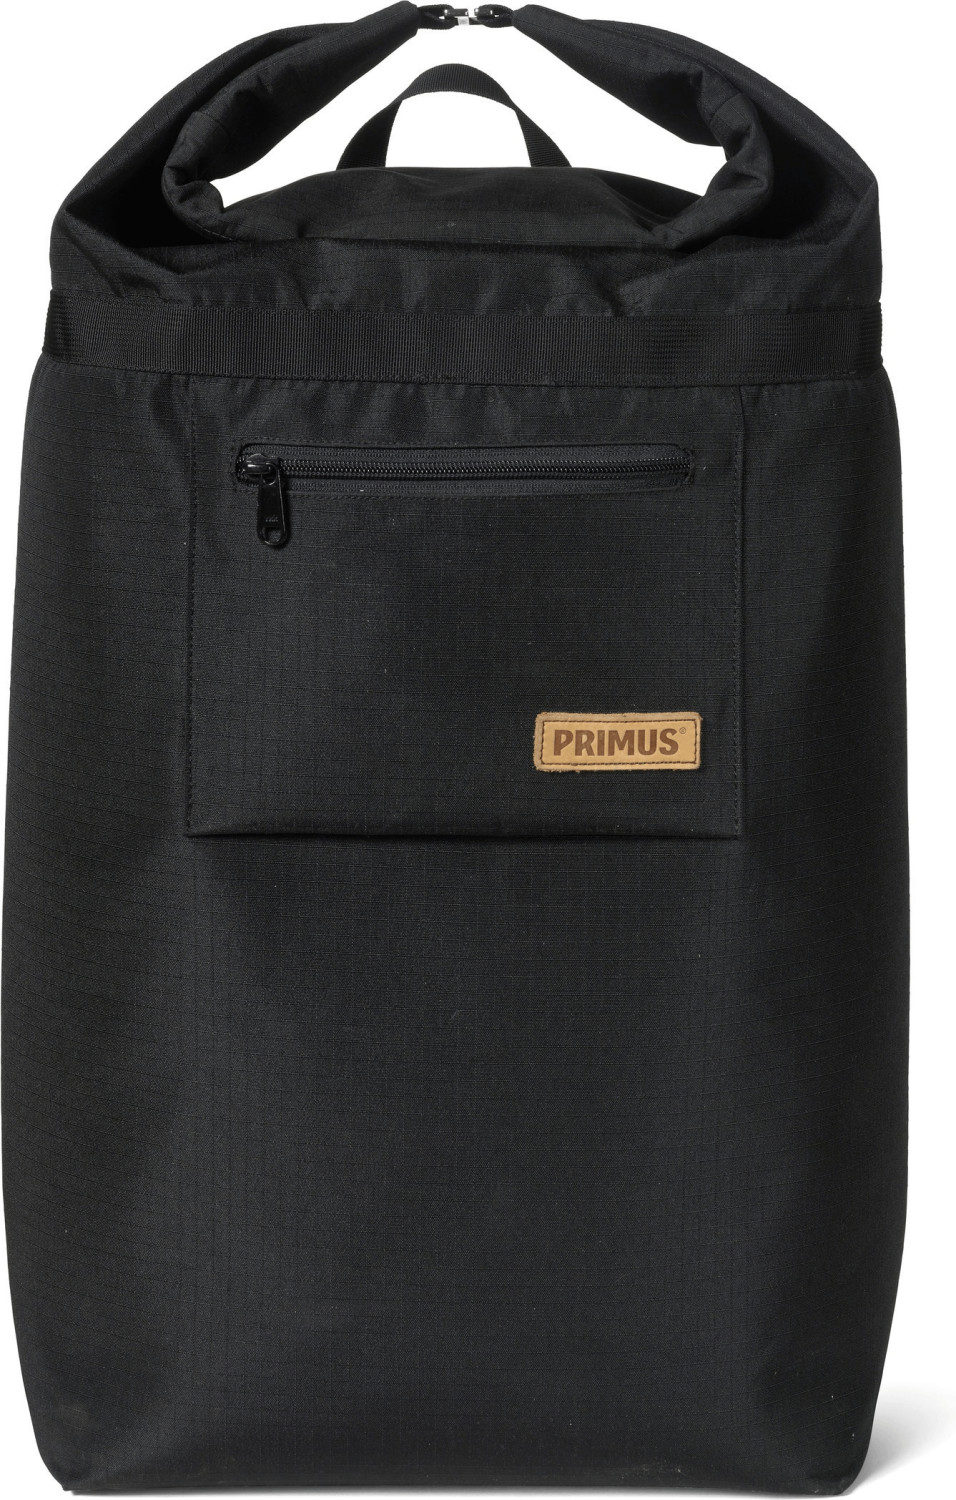 #Primus Cooler Backpack#